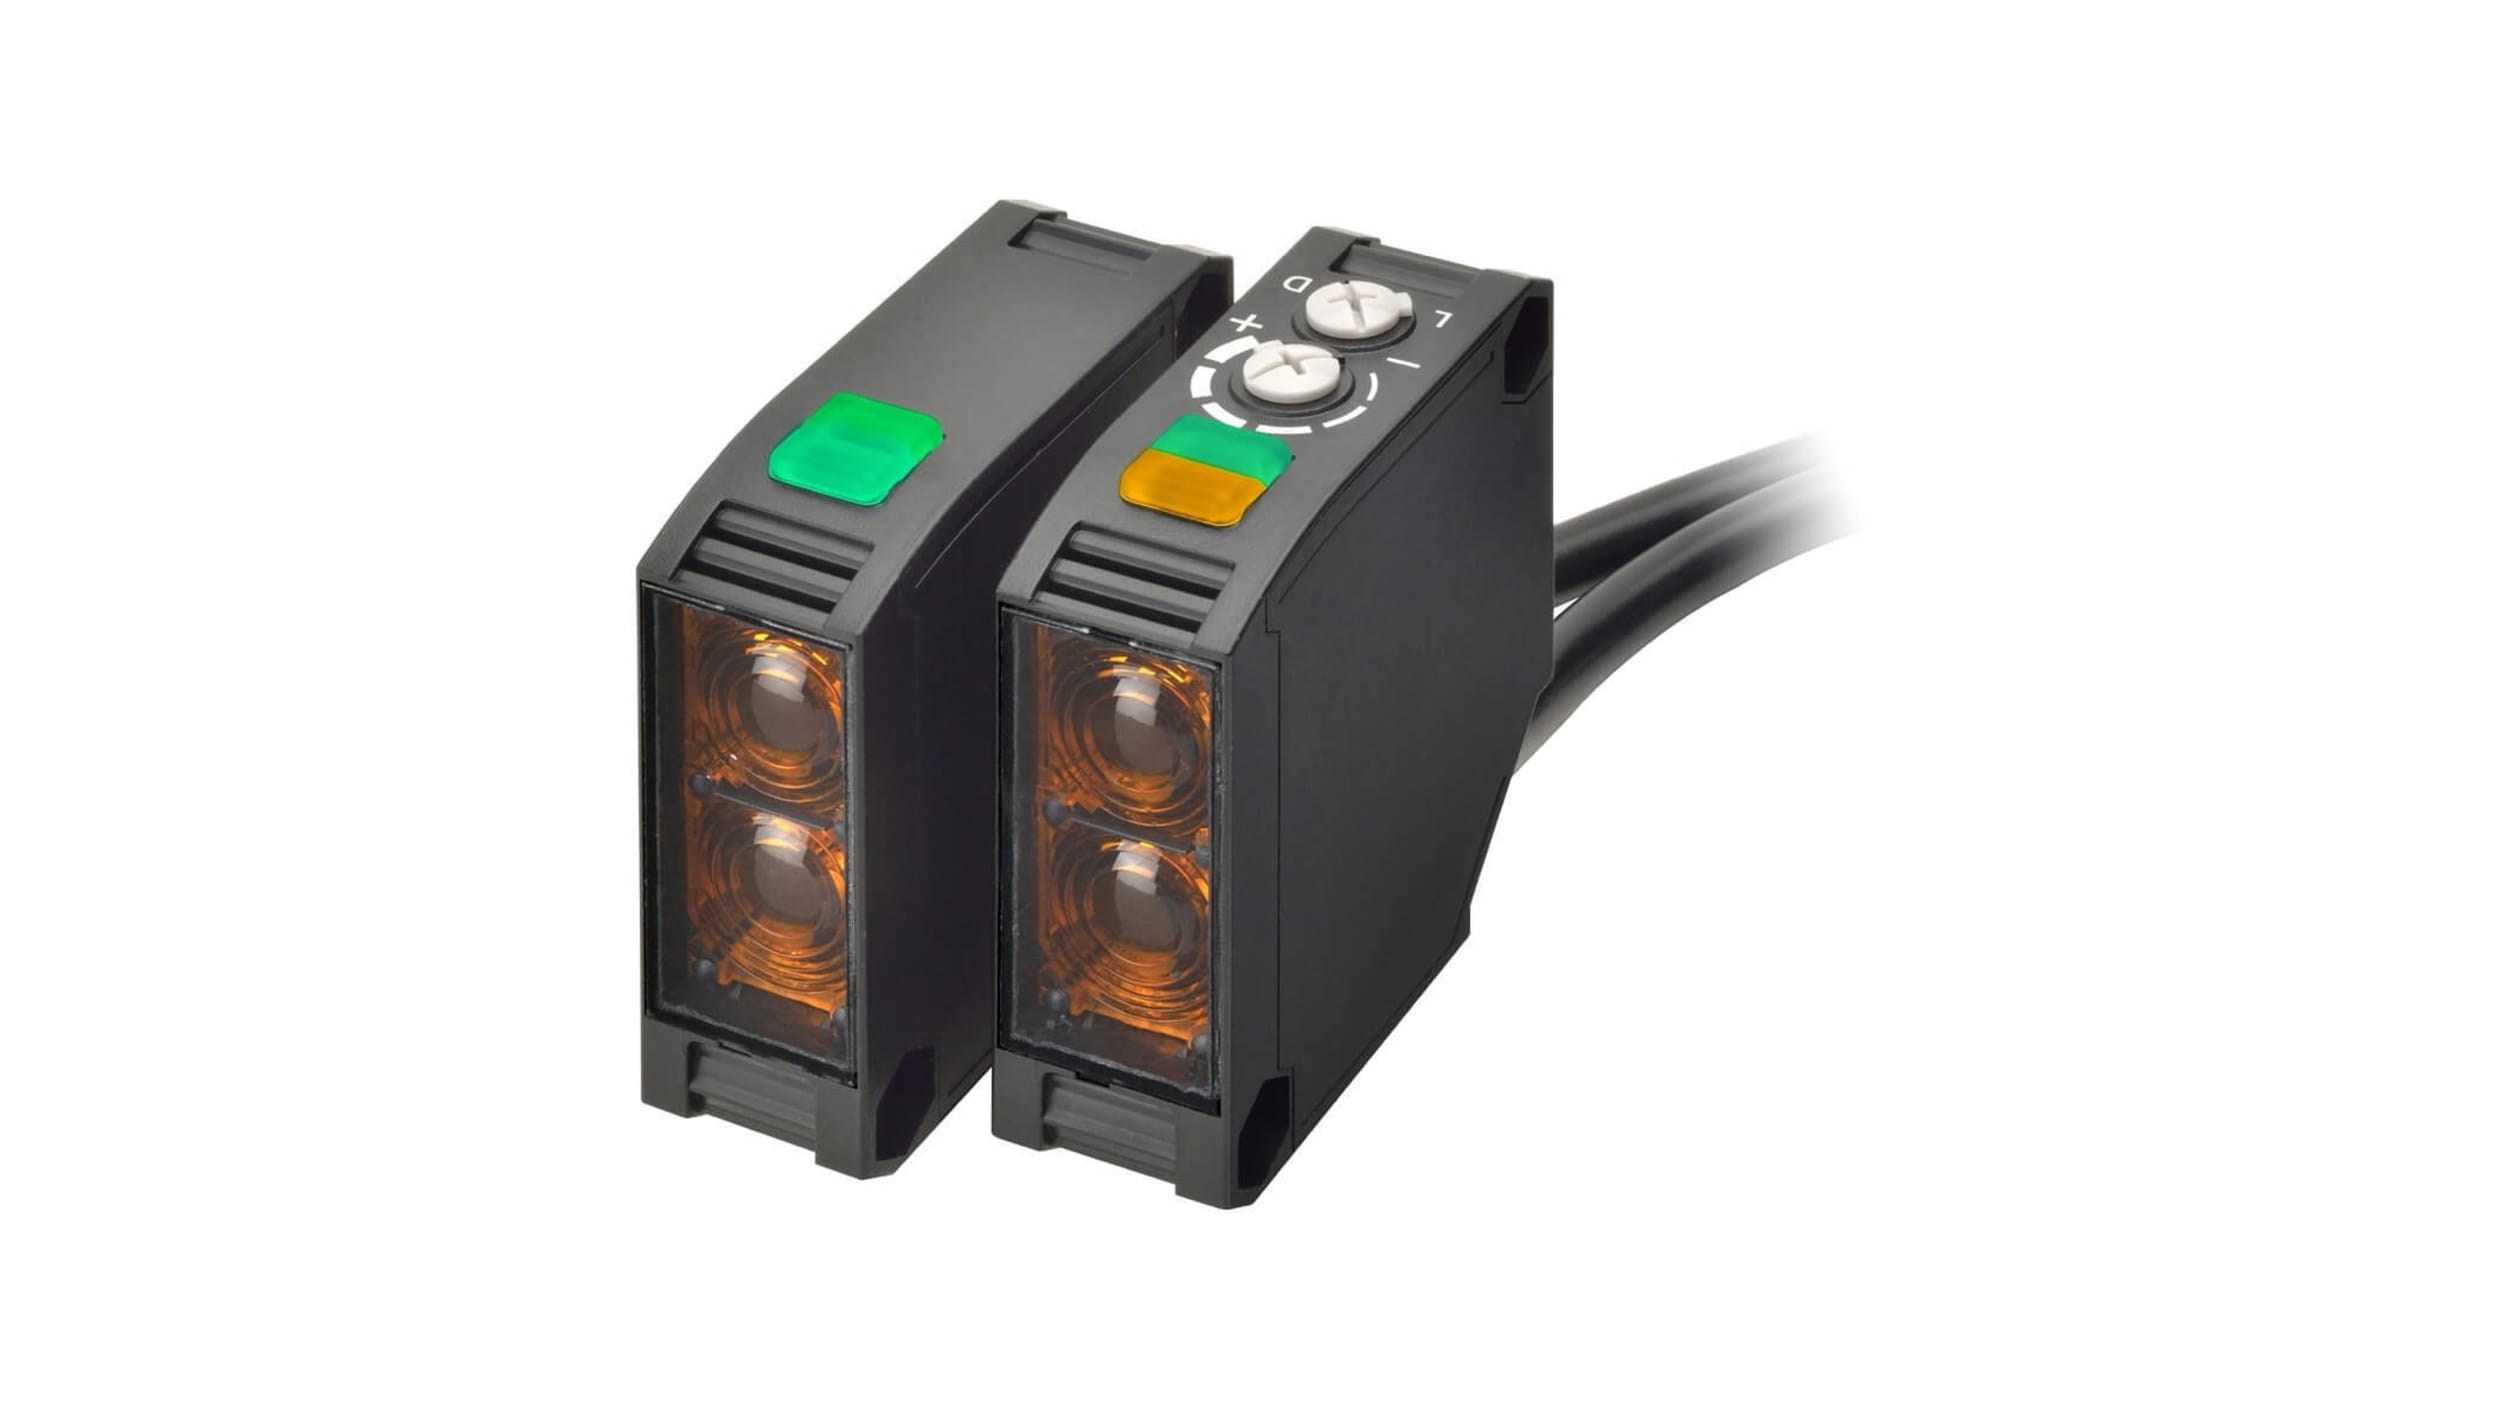 E3JK-TP11 2M Omron 光電センサ ブロック形 検出範囲 40000 mm RS